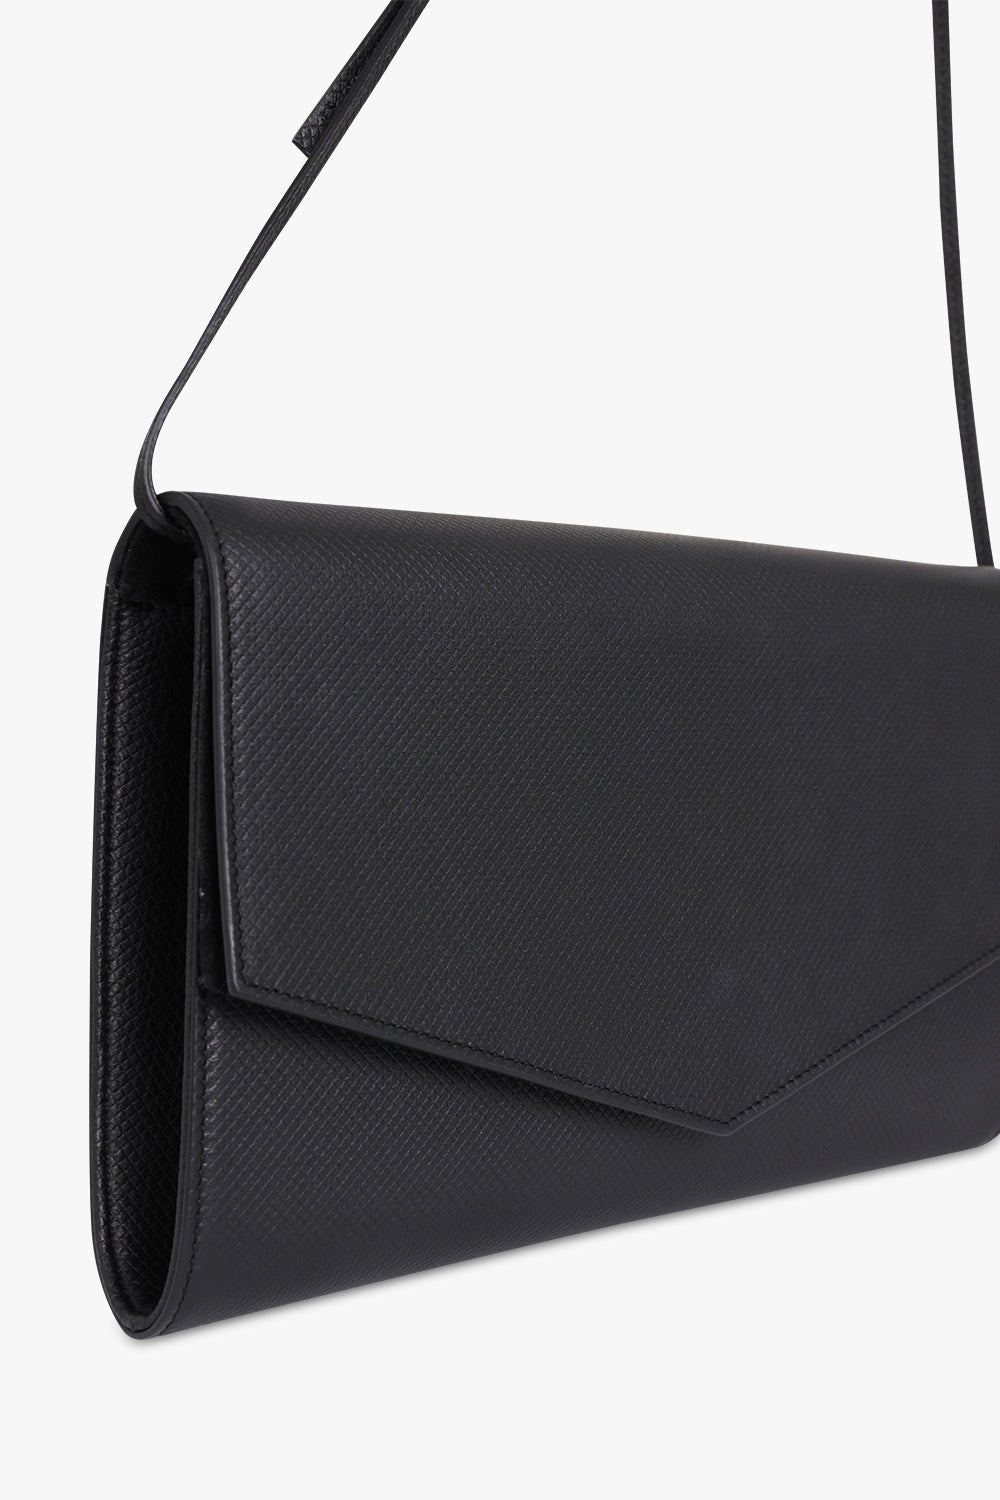 THE ROW BAGS Black Large Envelope Bag | Black